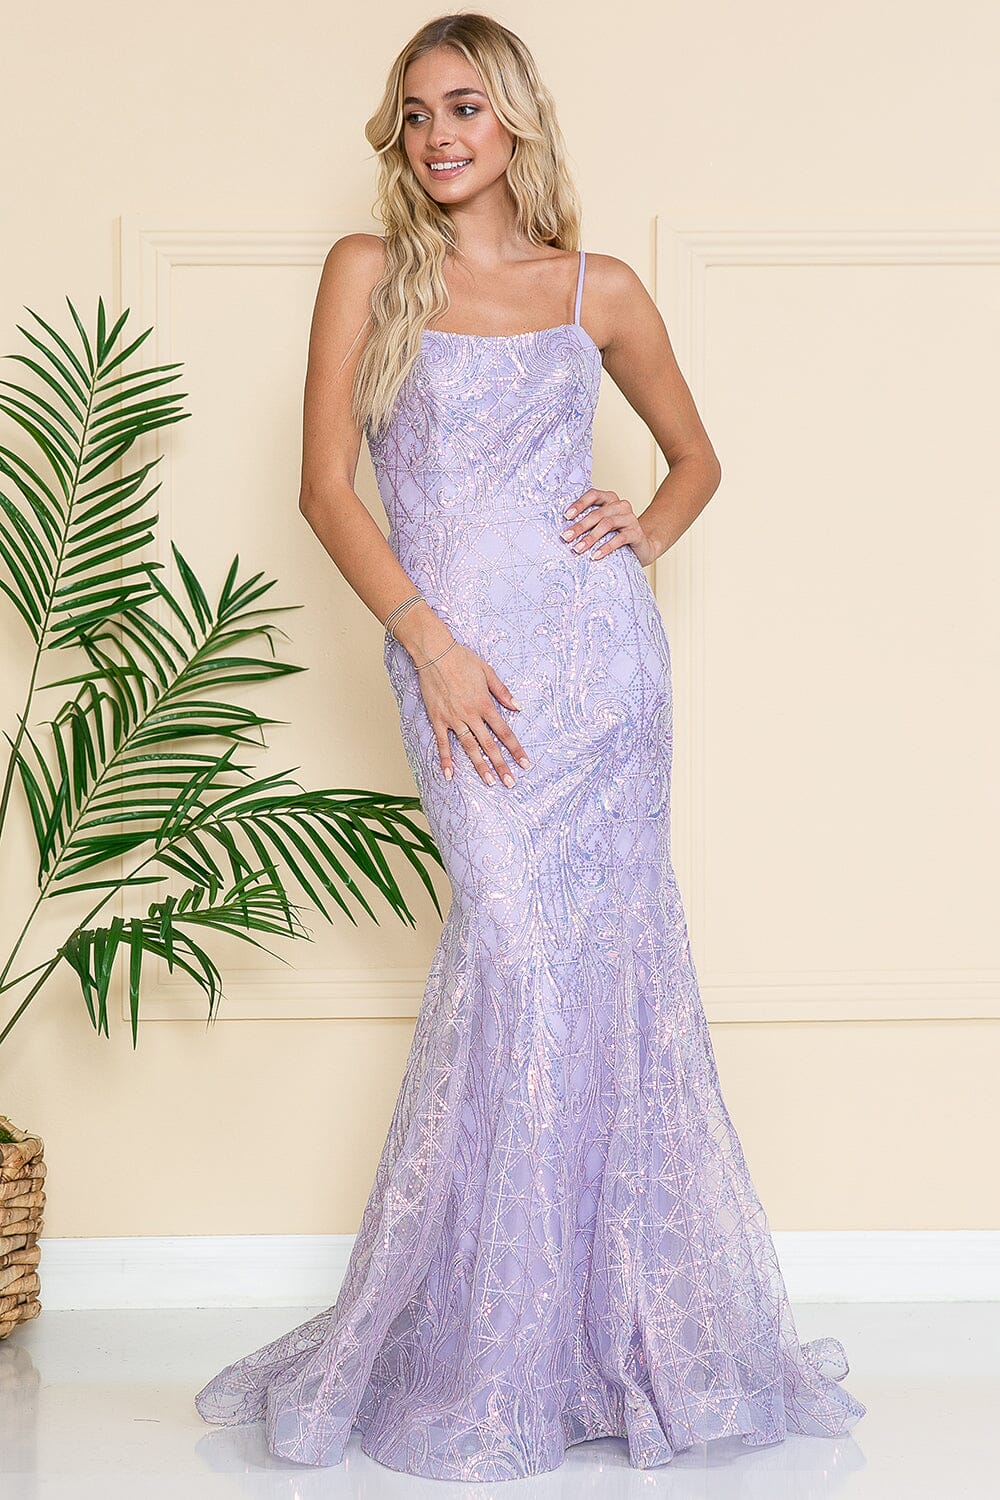 Embellished Sleeveless Mermaid Dress by Amelia Couture 6116